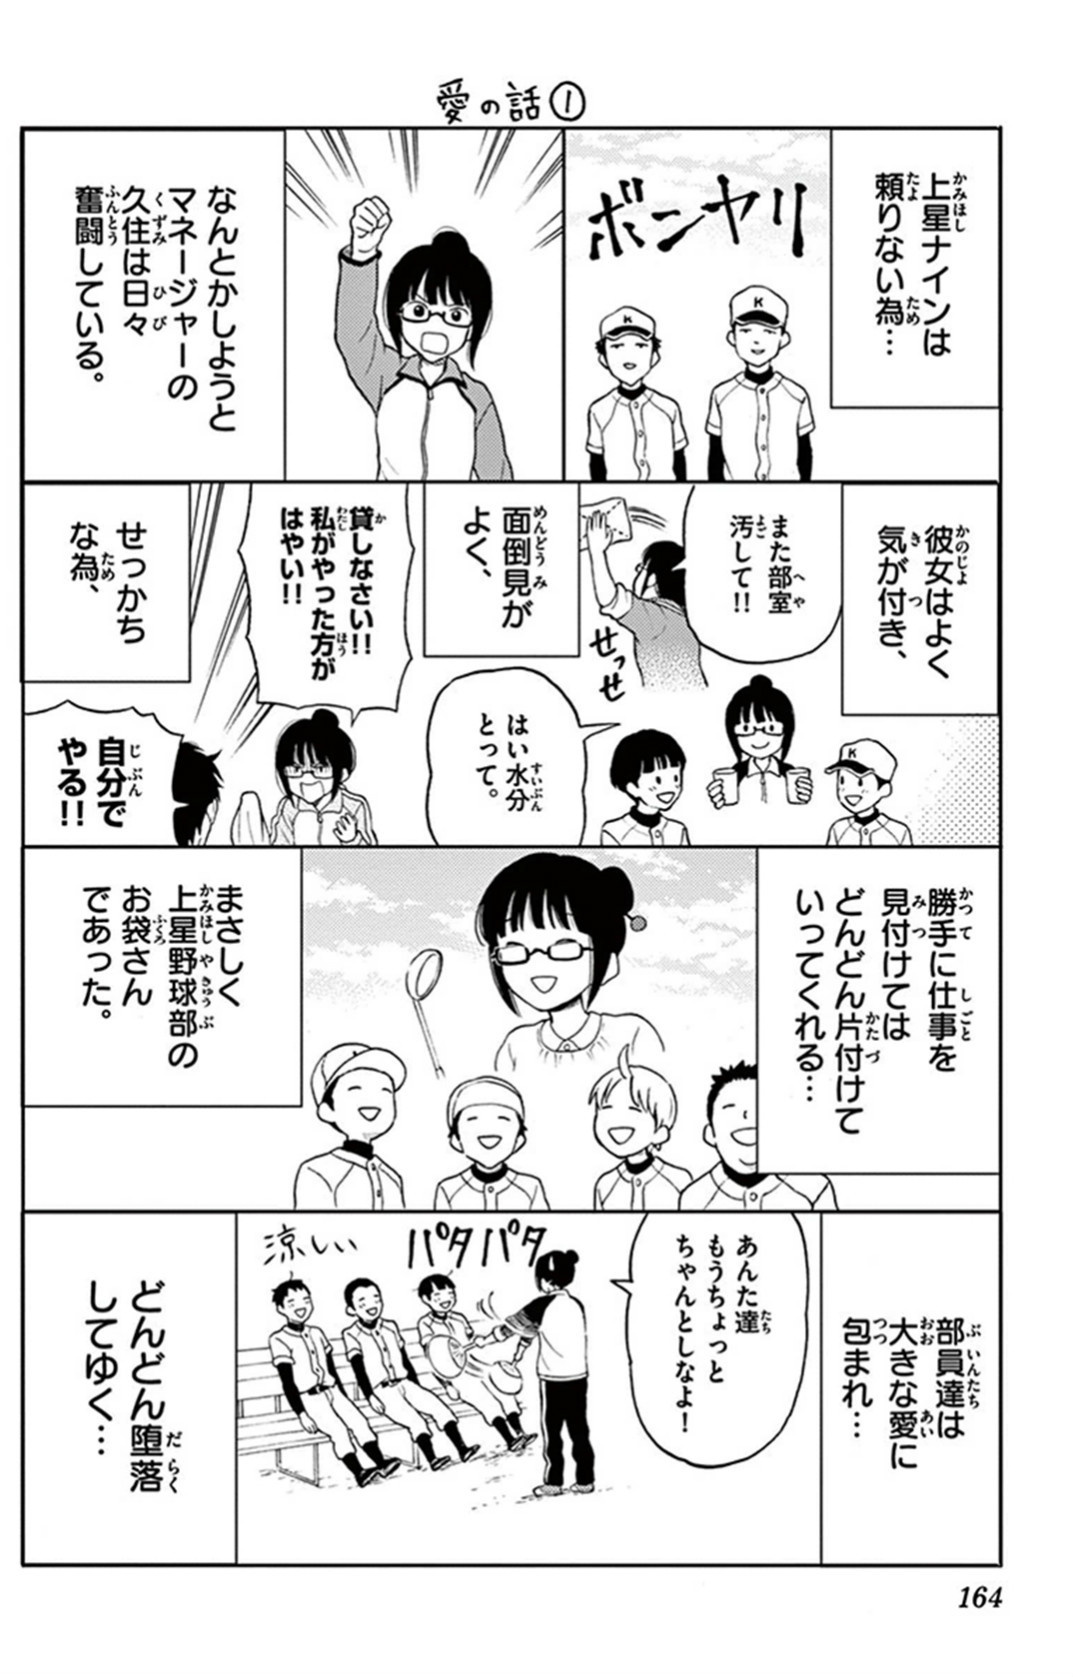 Yugami-kun ni wa Tomodachi ga Inai - Chapter 026.5 - Page 3